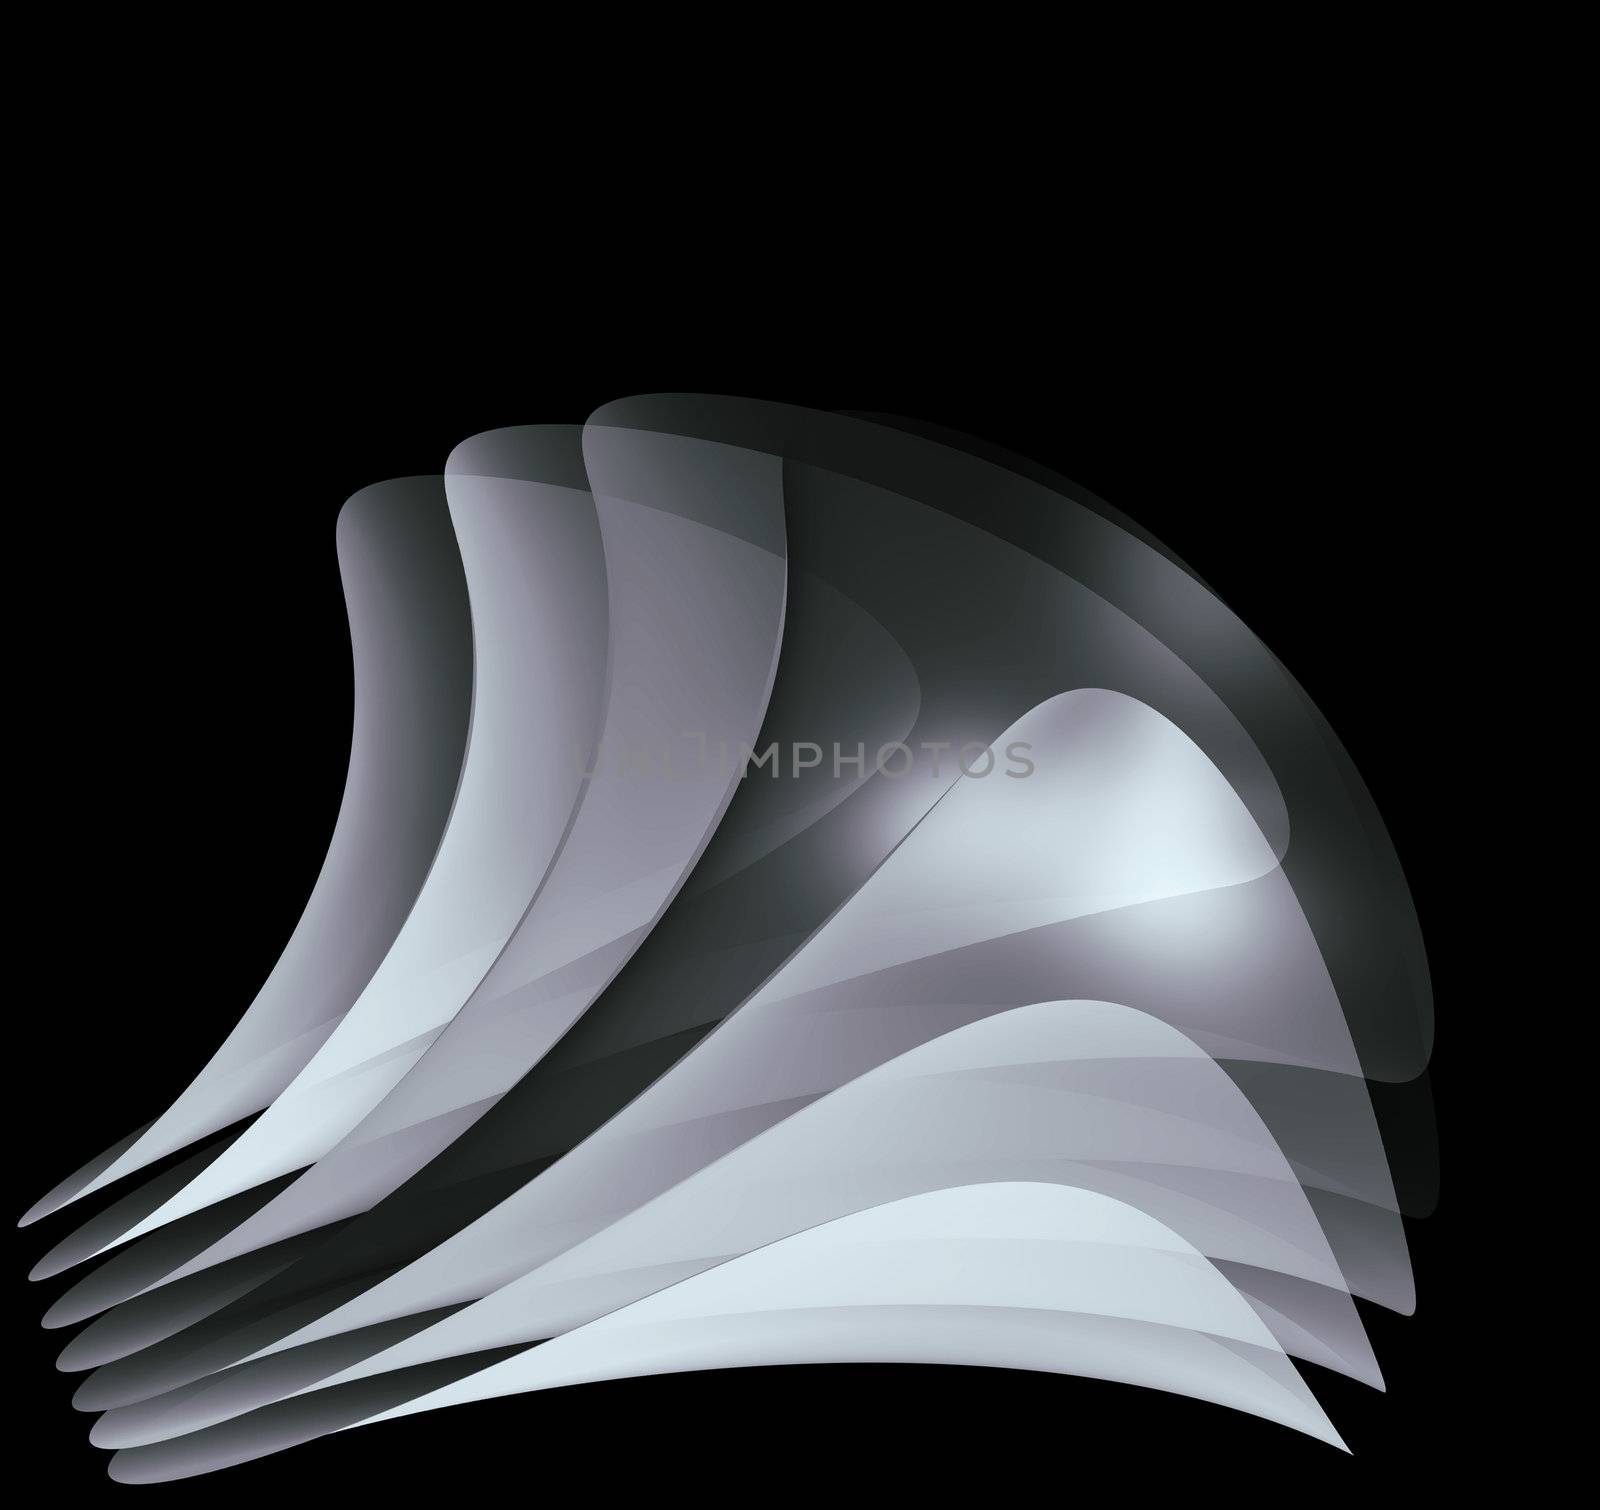 abstract monochrome fan by screenexa